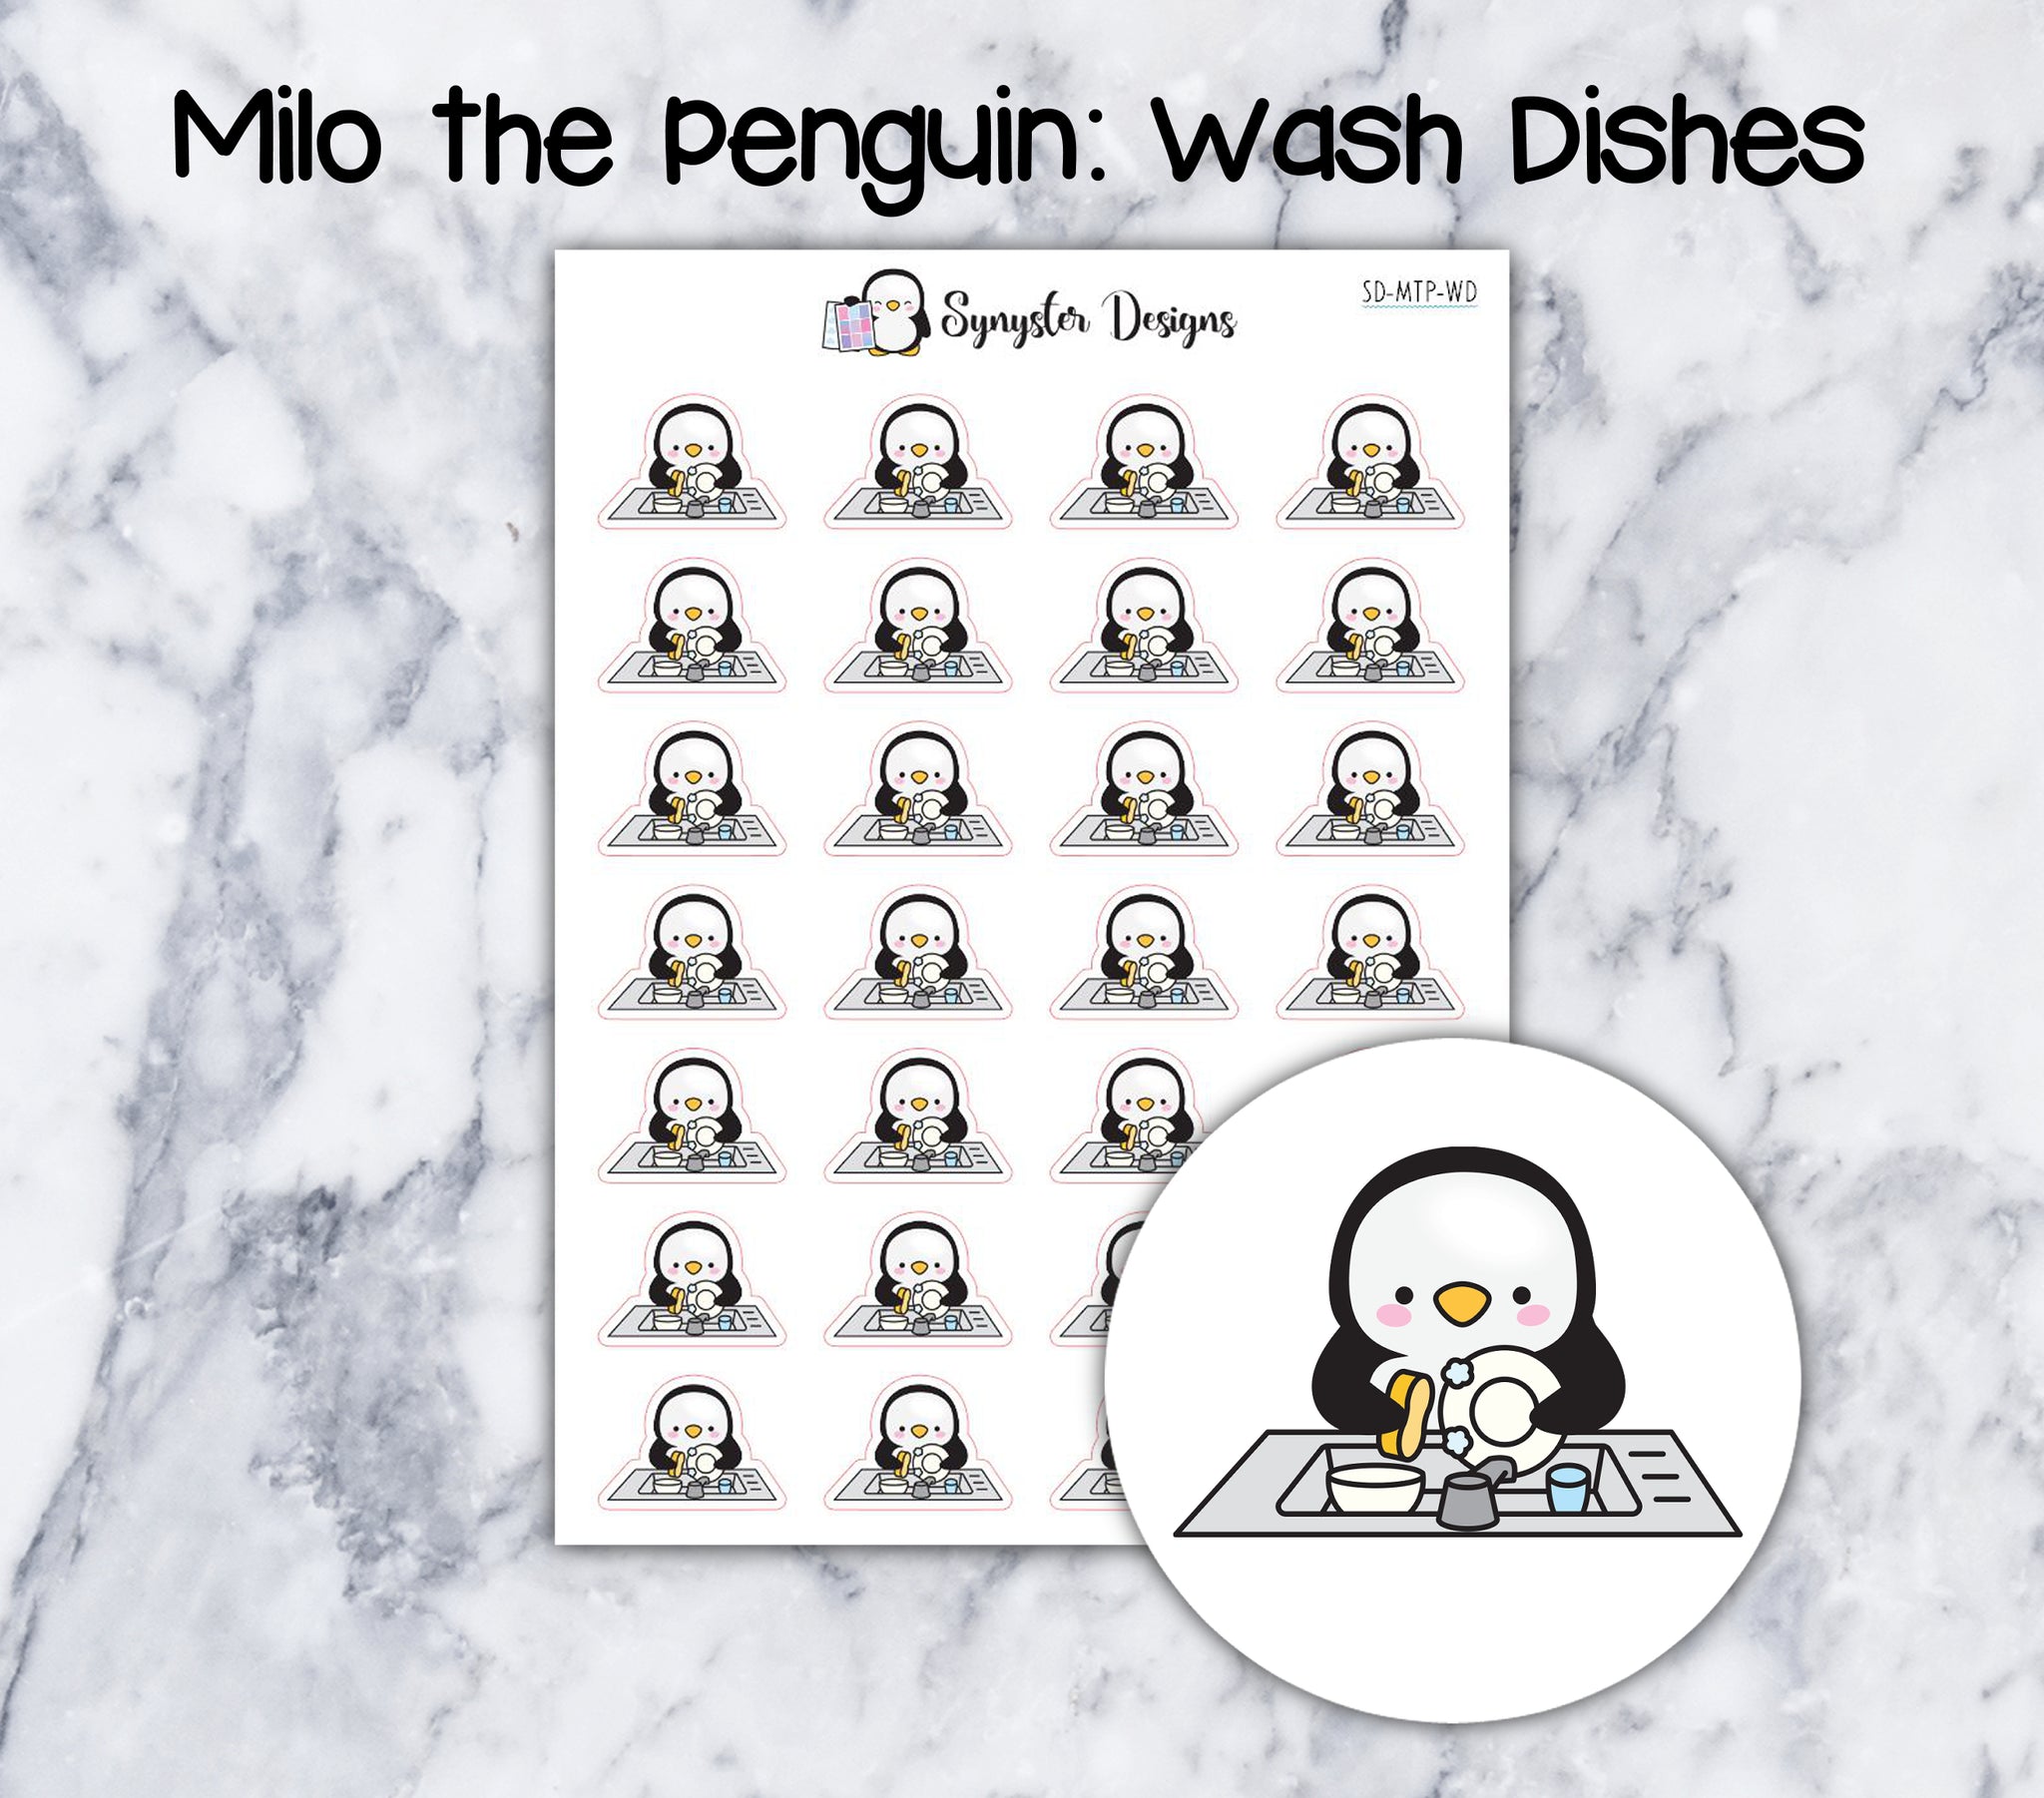 Wash Dishes Milo the Penguin